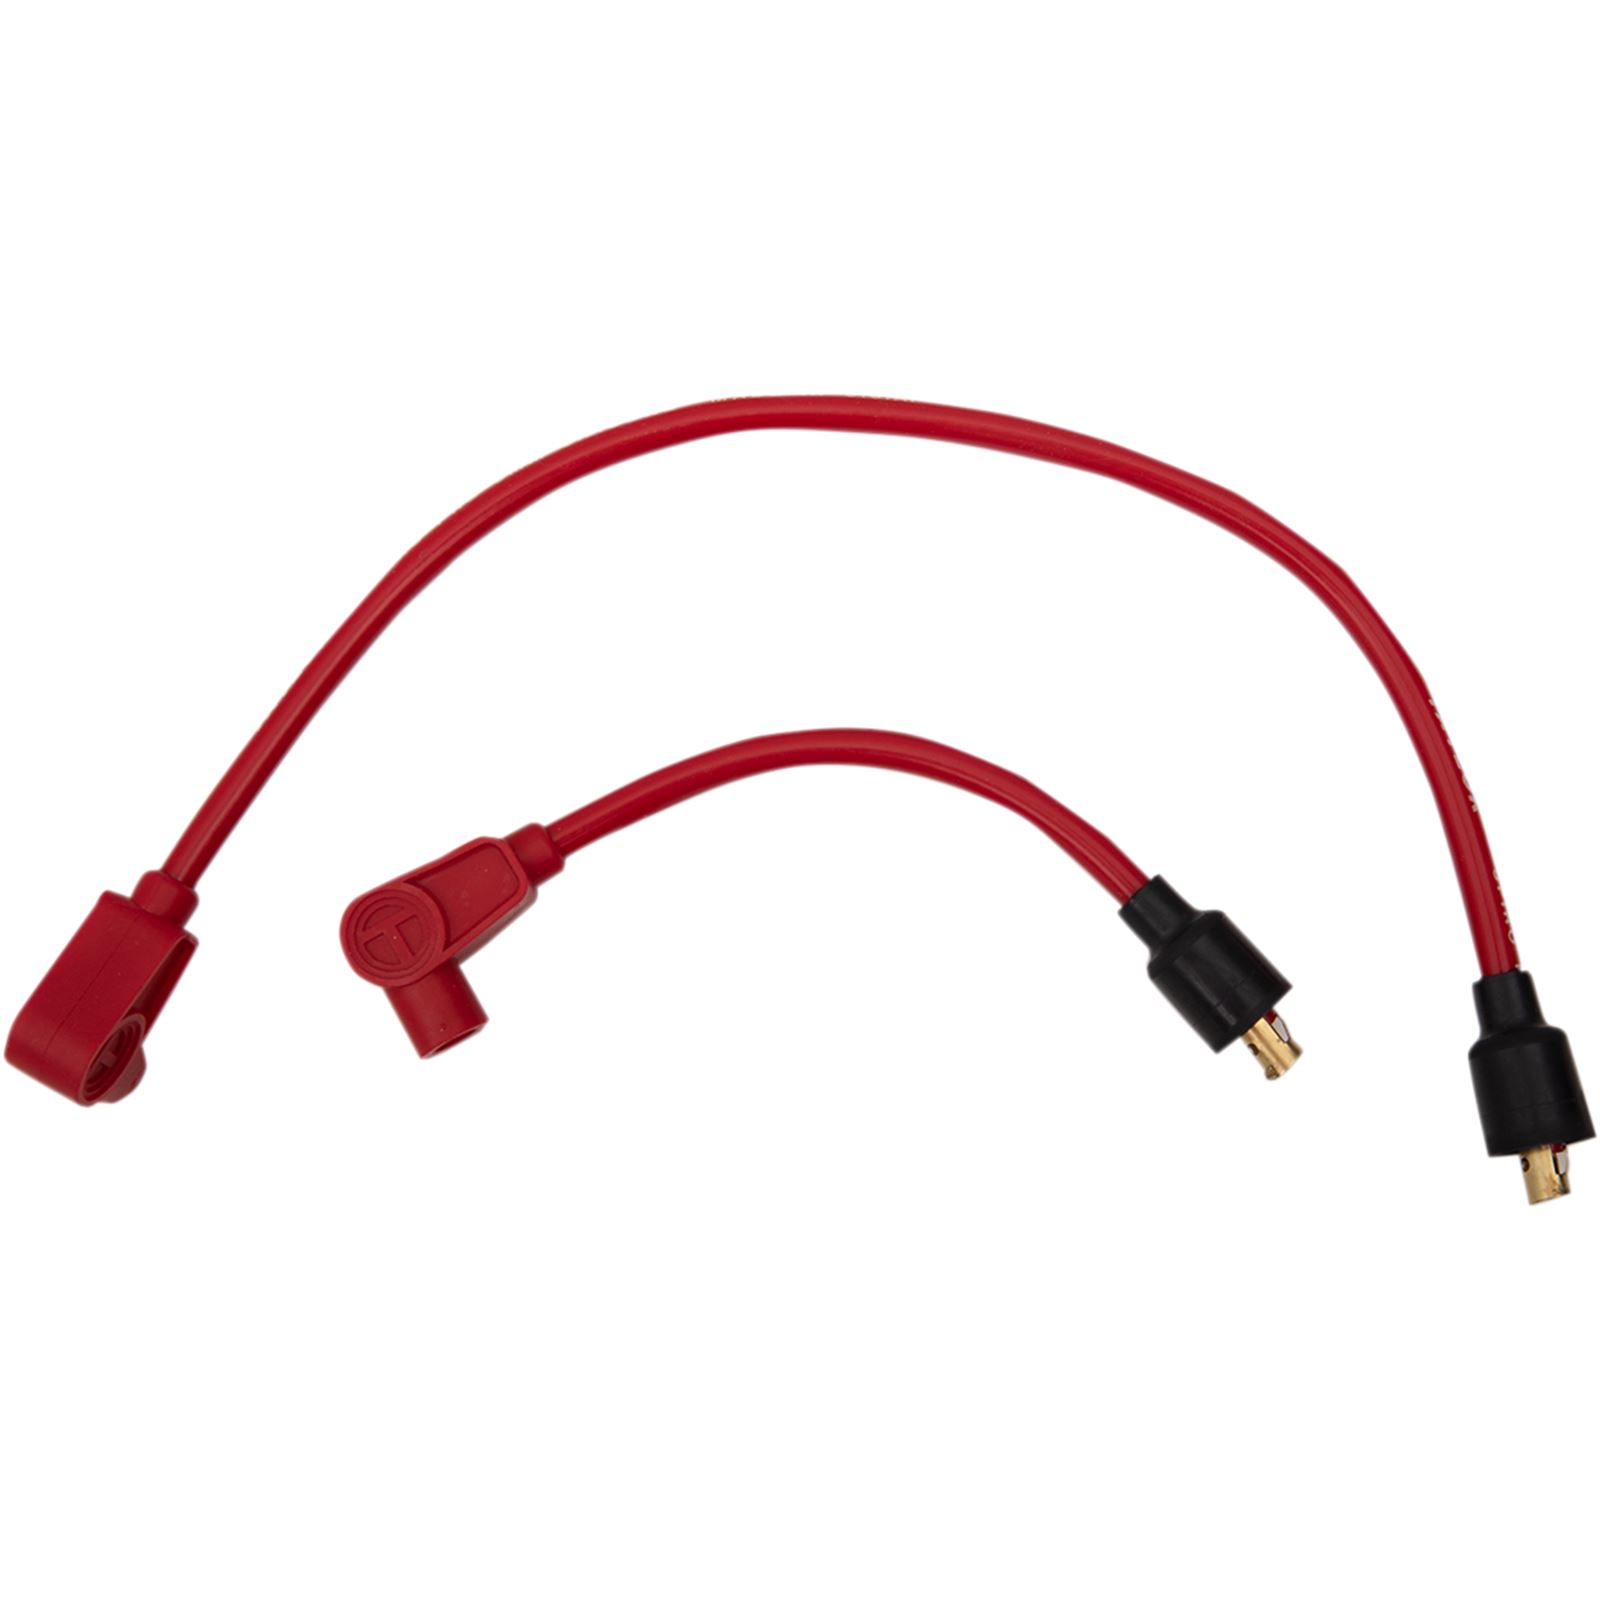 Sumax Spark Plug Wires - Red - FL/FX